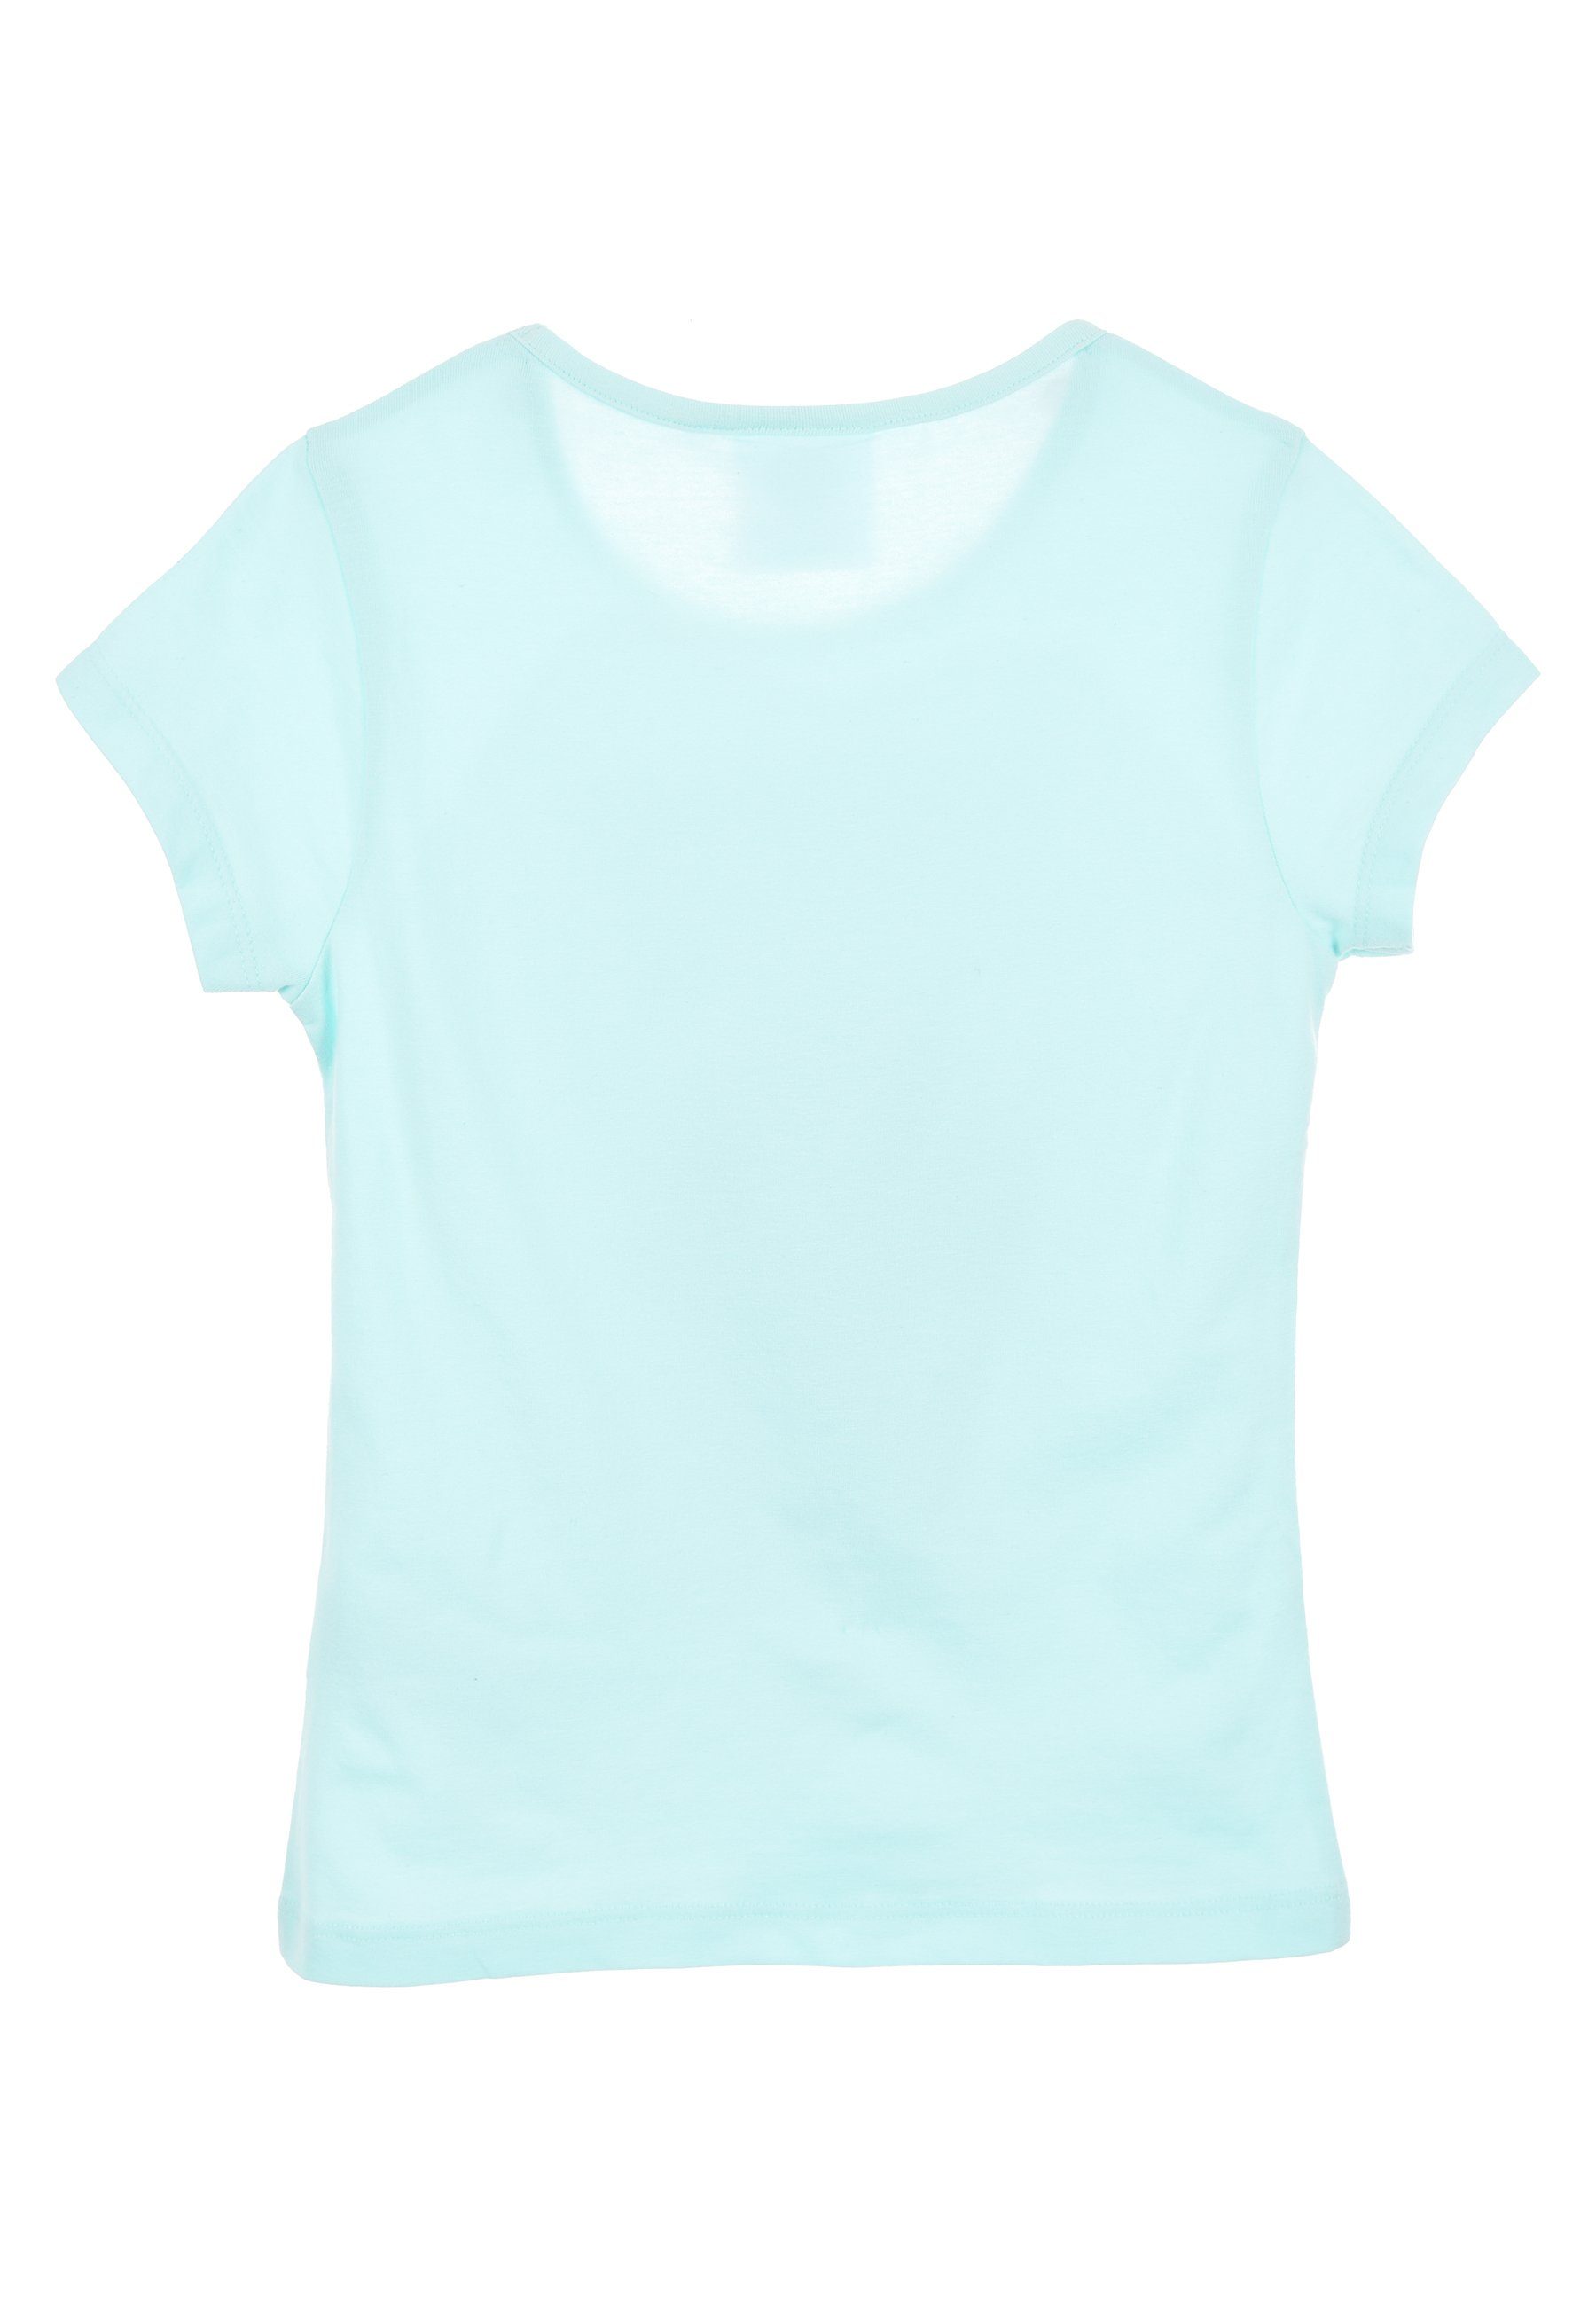 PAW PATROL T-Shirt T-Shirt Mädchen kurzarm Türkis Shirt Kinder